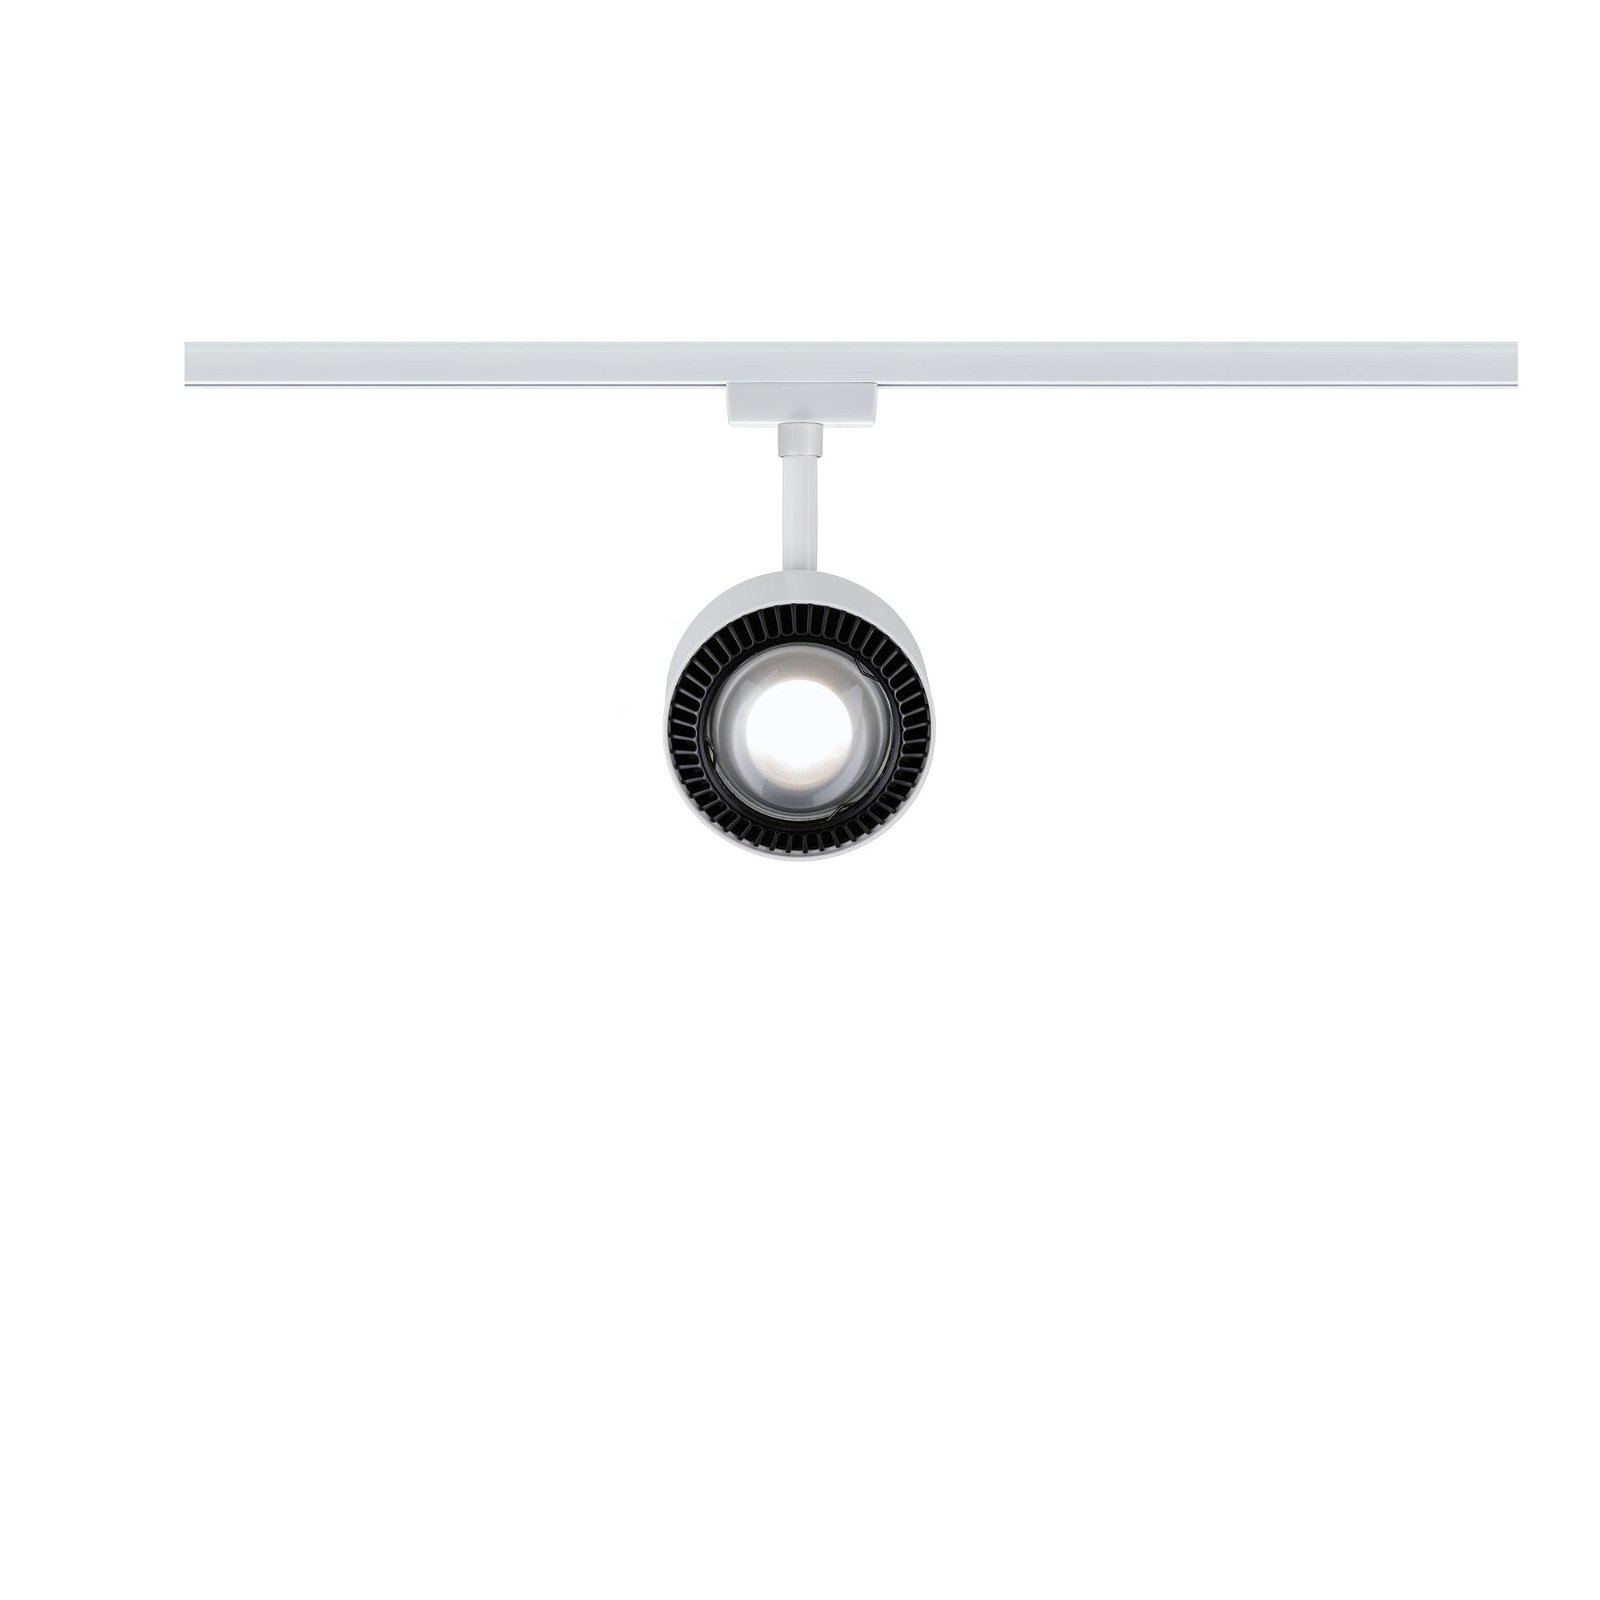 URail LED Rail spot Aldan Individual Spot 498lm 8W 2700K dimmable 230V White